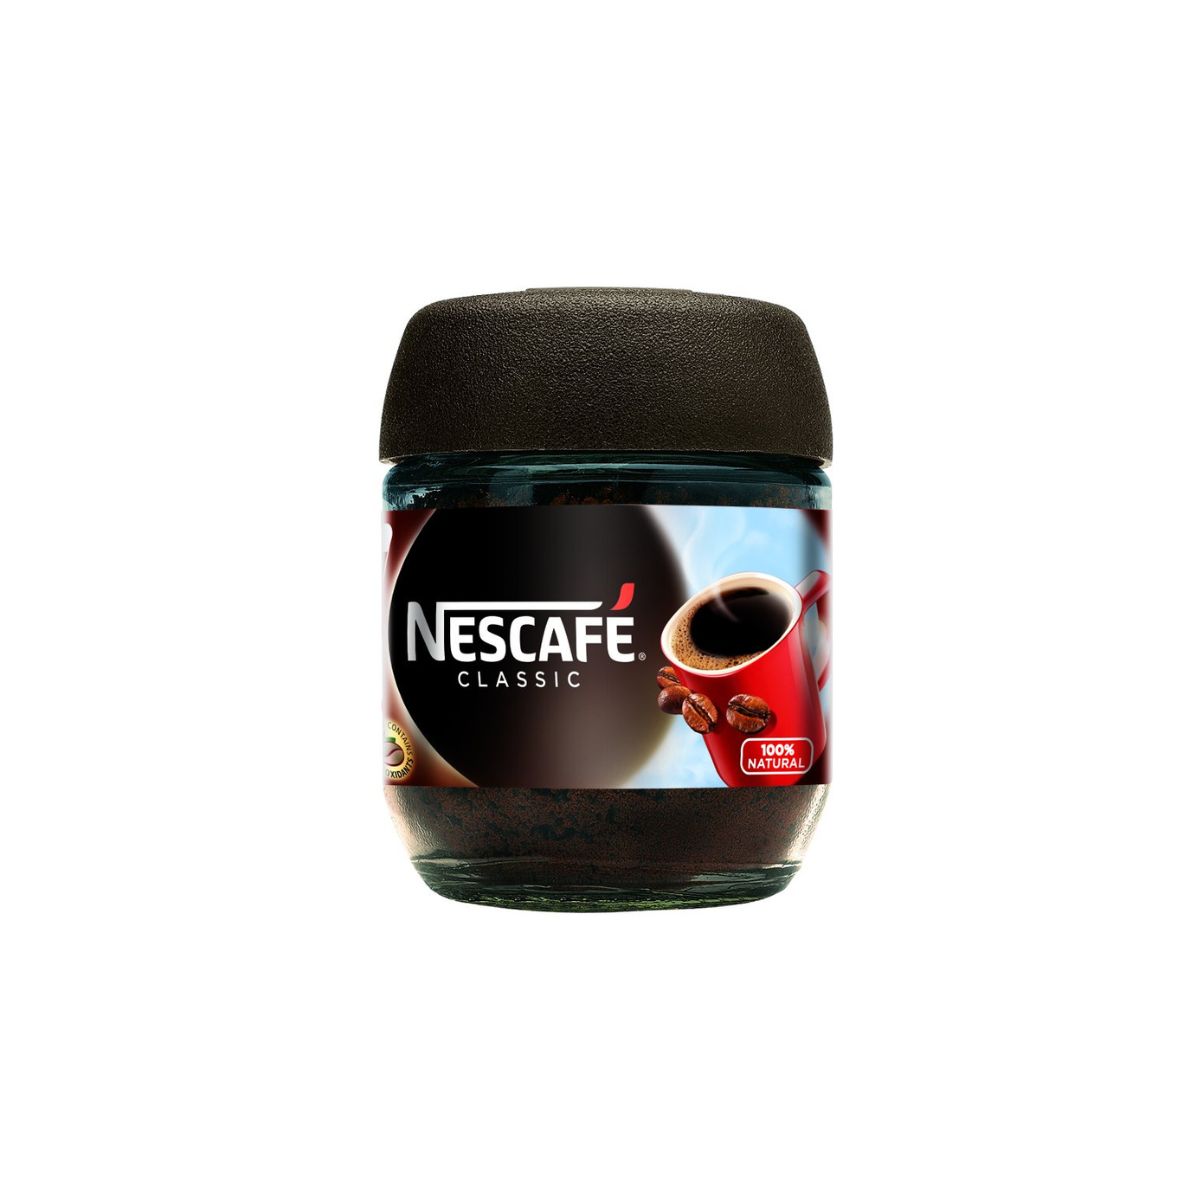 Nescafe Classic Coffee - 24g